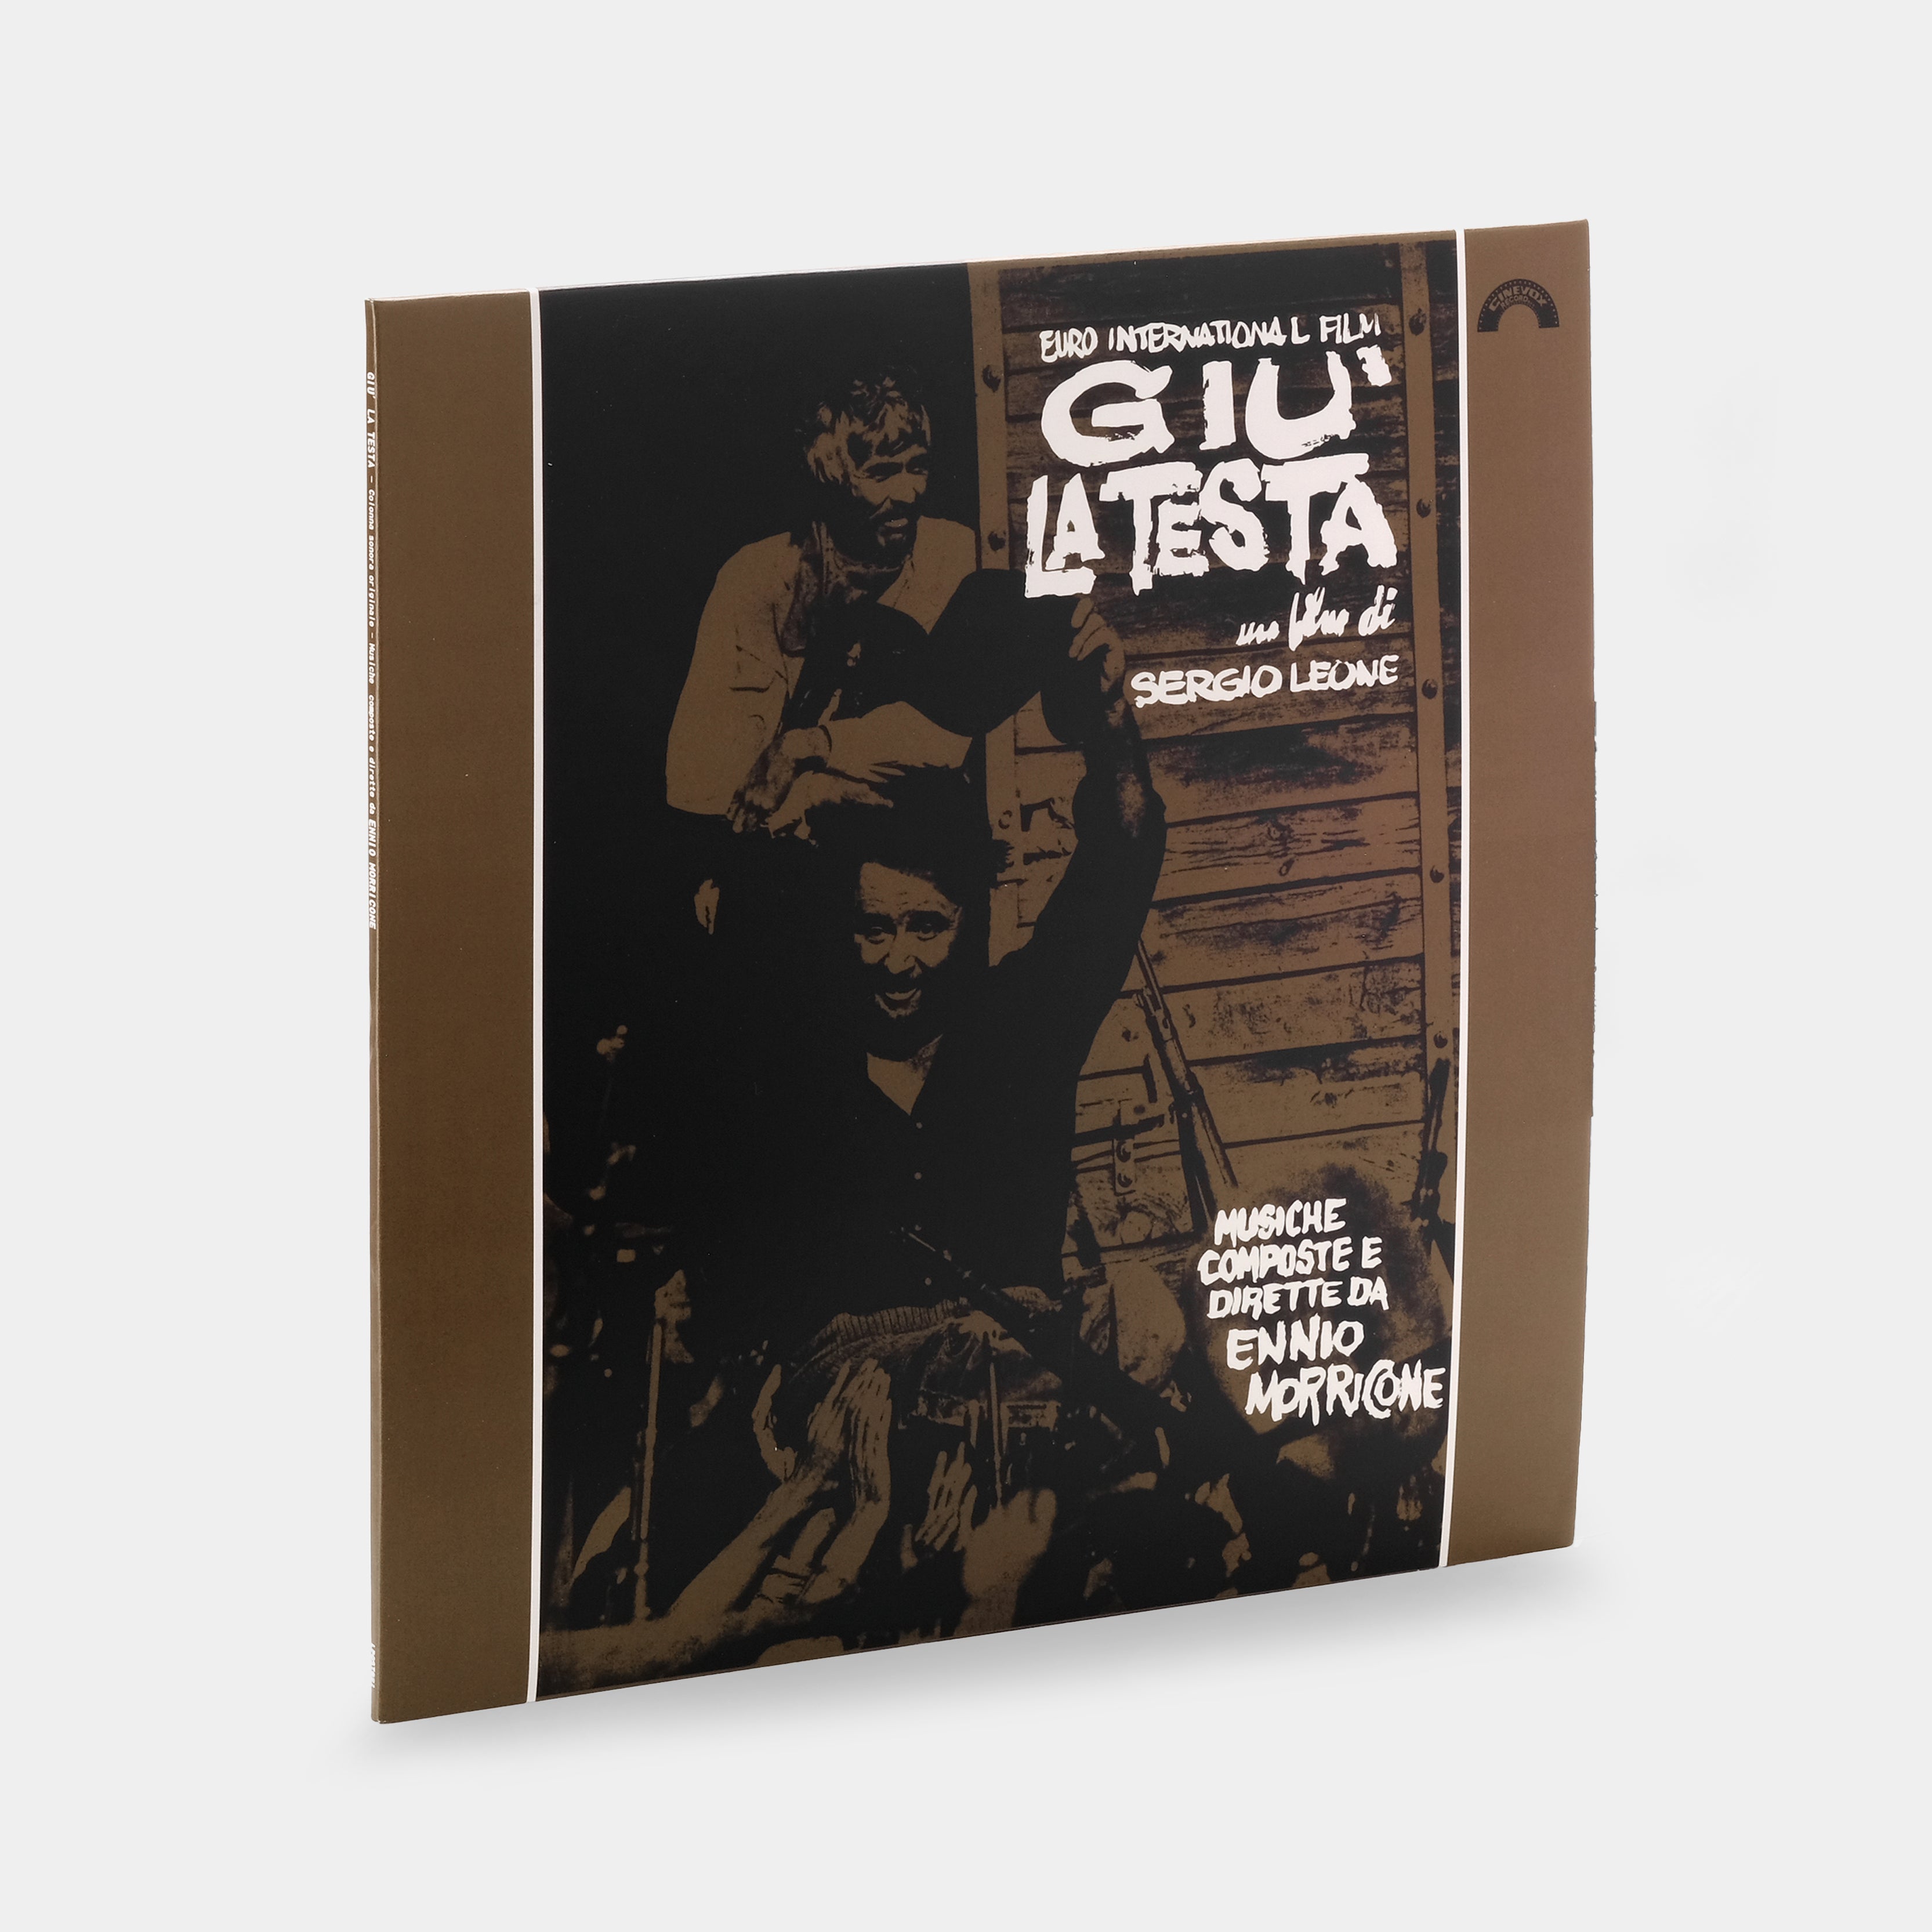 Ennio Morricone - Giu' La Testa LP Crystal Clear Vinyl Record